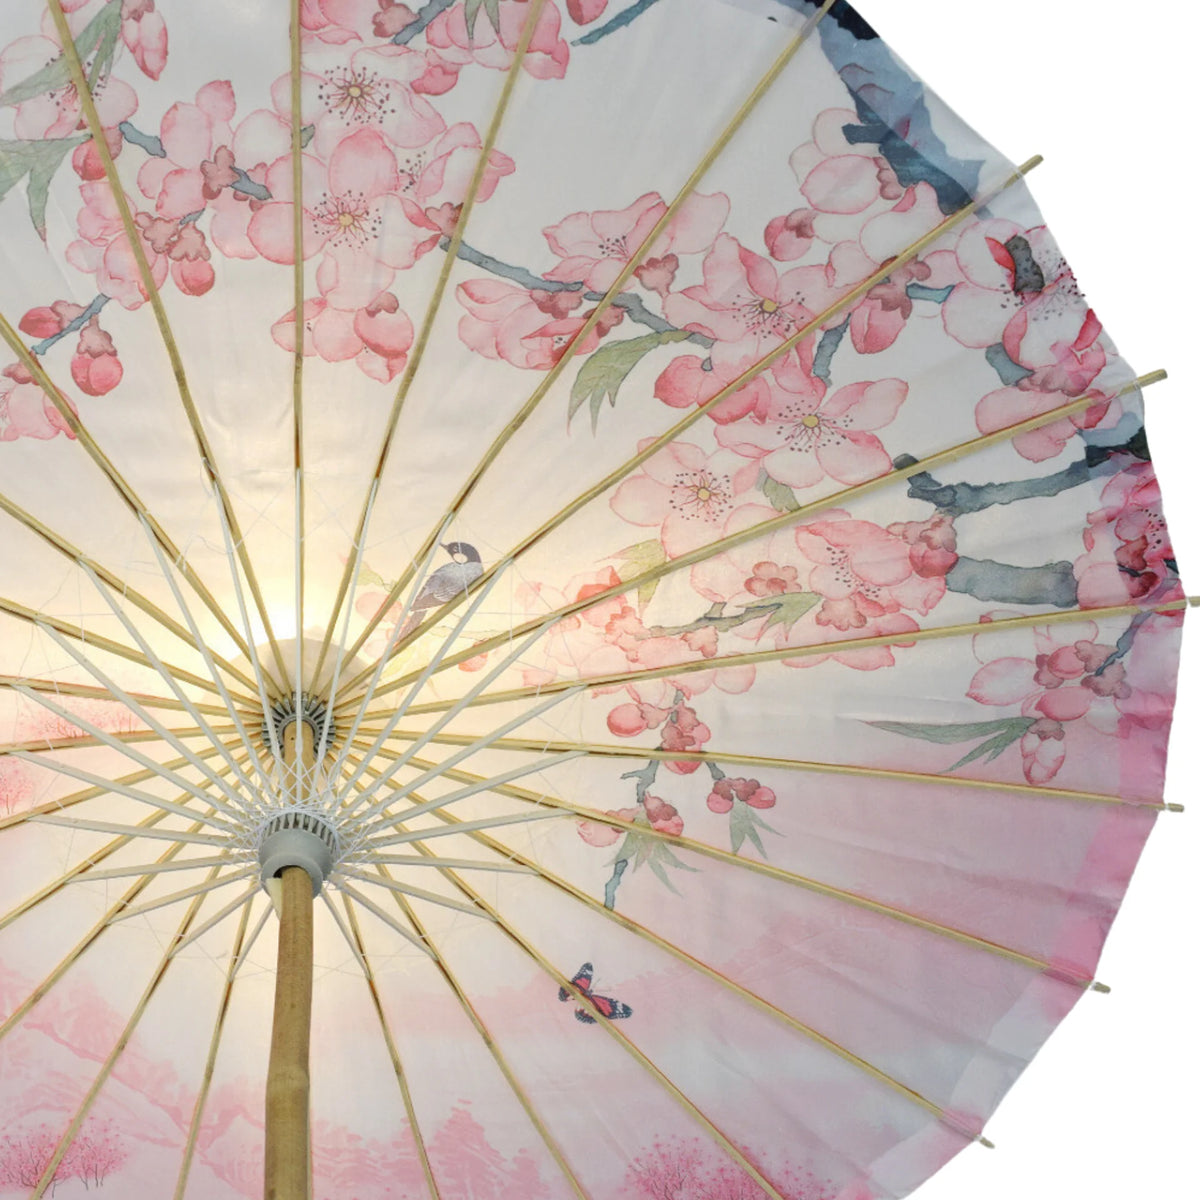 32 Inch Pink Cherry Blossom Premium Nylon Parasol Umbrella with Elegant Handle - Luna Bazaar | Boho &amp; Vintage Style Decor